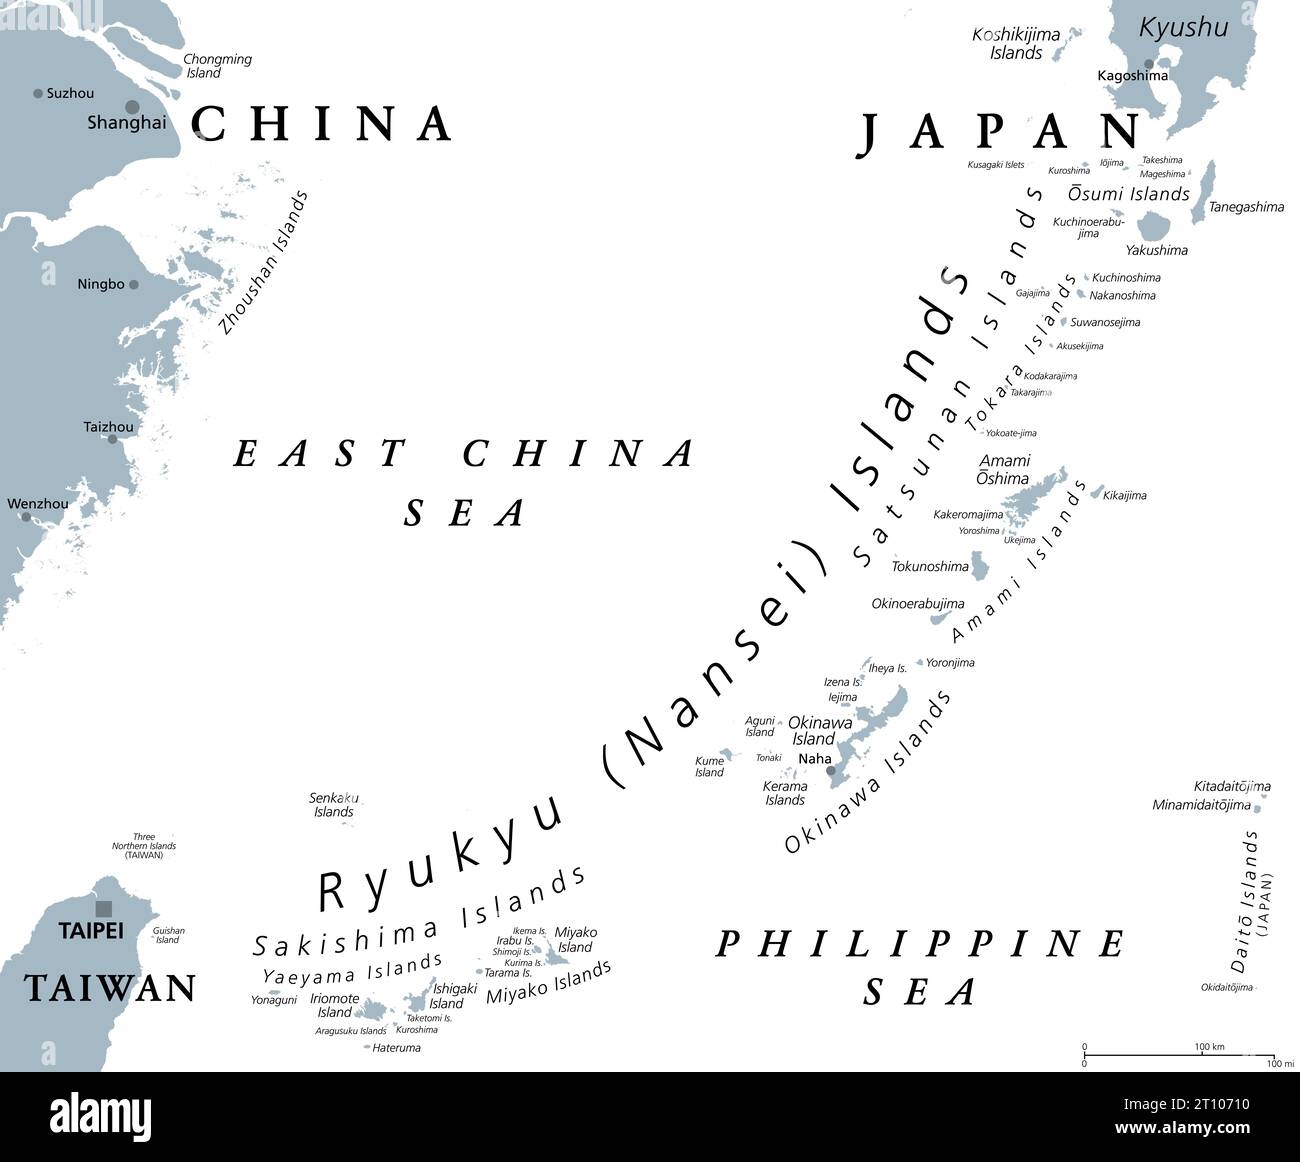 Ryukyu Islands, or Nansei Islands, gray political map. Ryukyu Arc, a Japanese, mostly volcanic island chain stretching from Kyushu to Yonaguni Island. Stock Photo